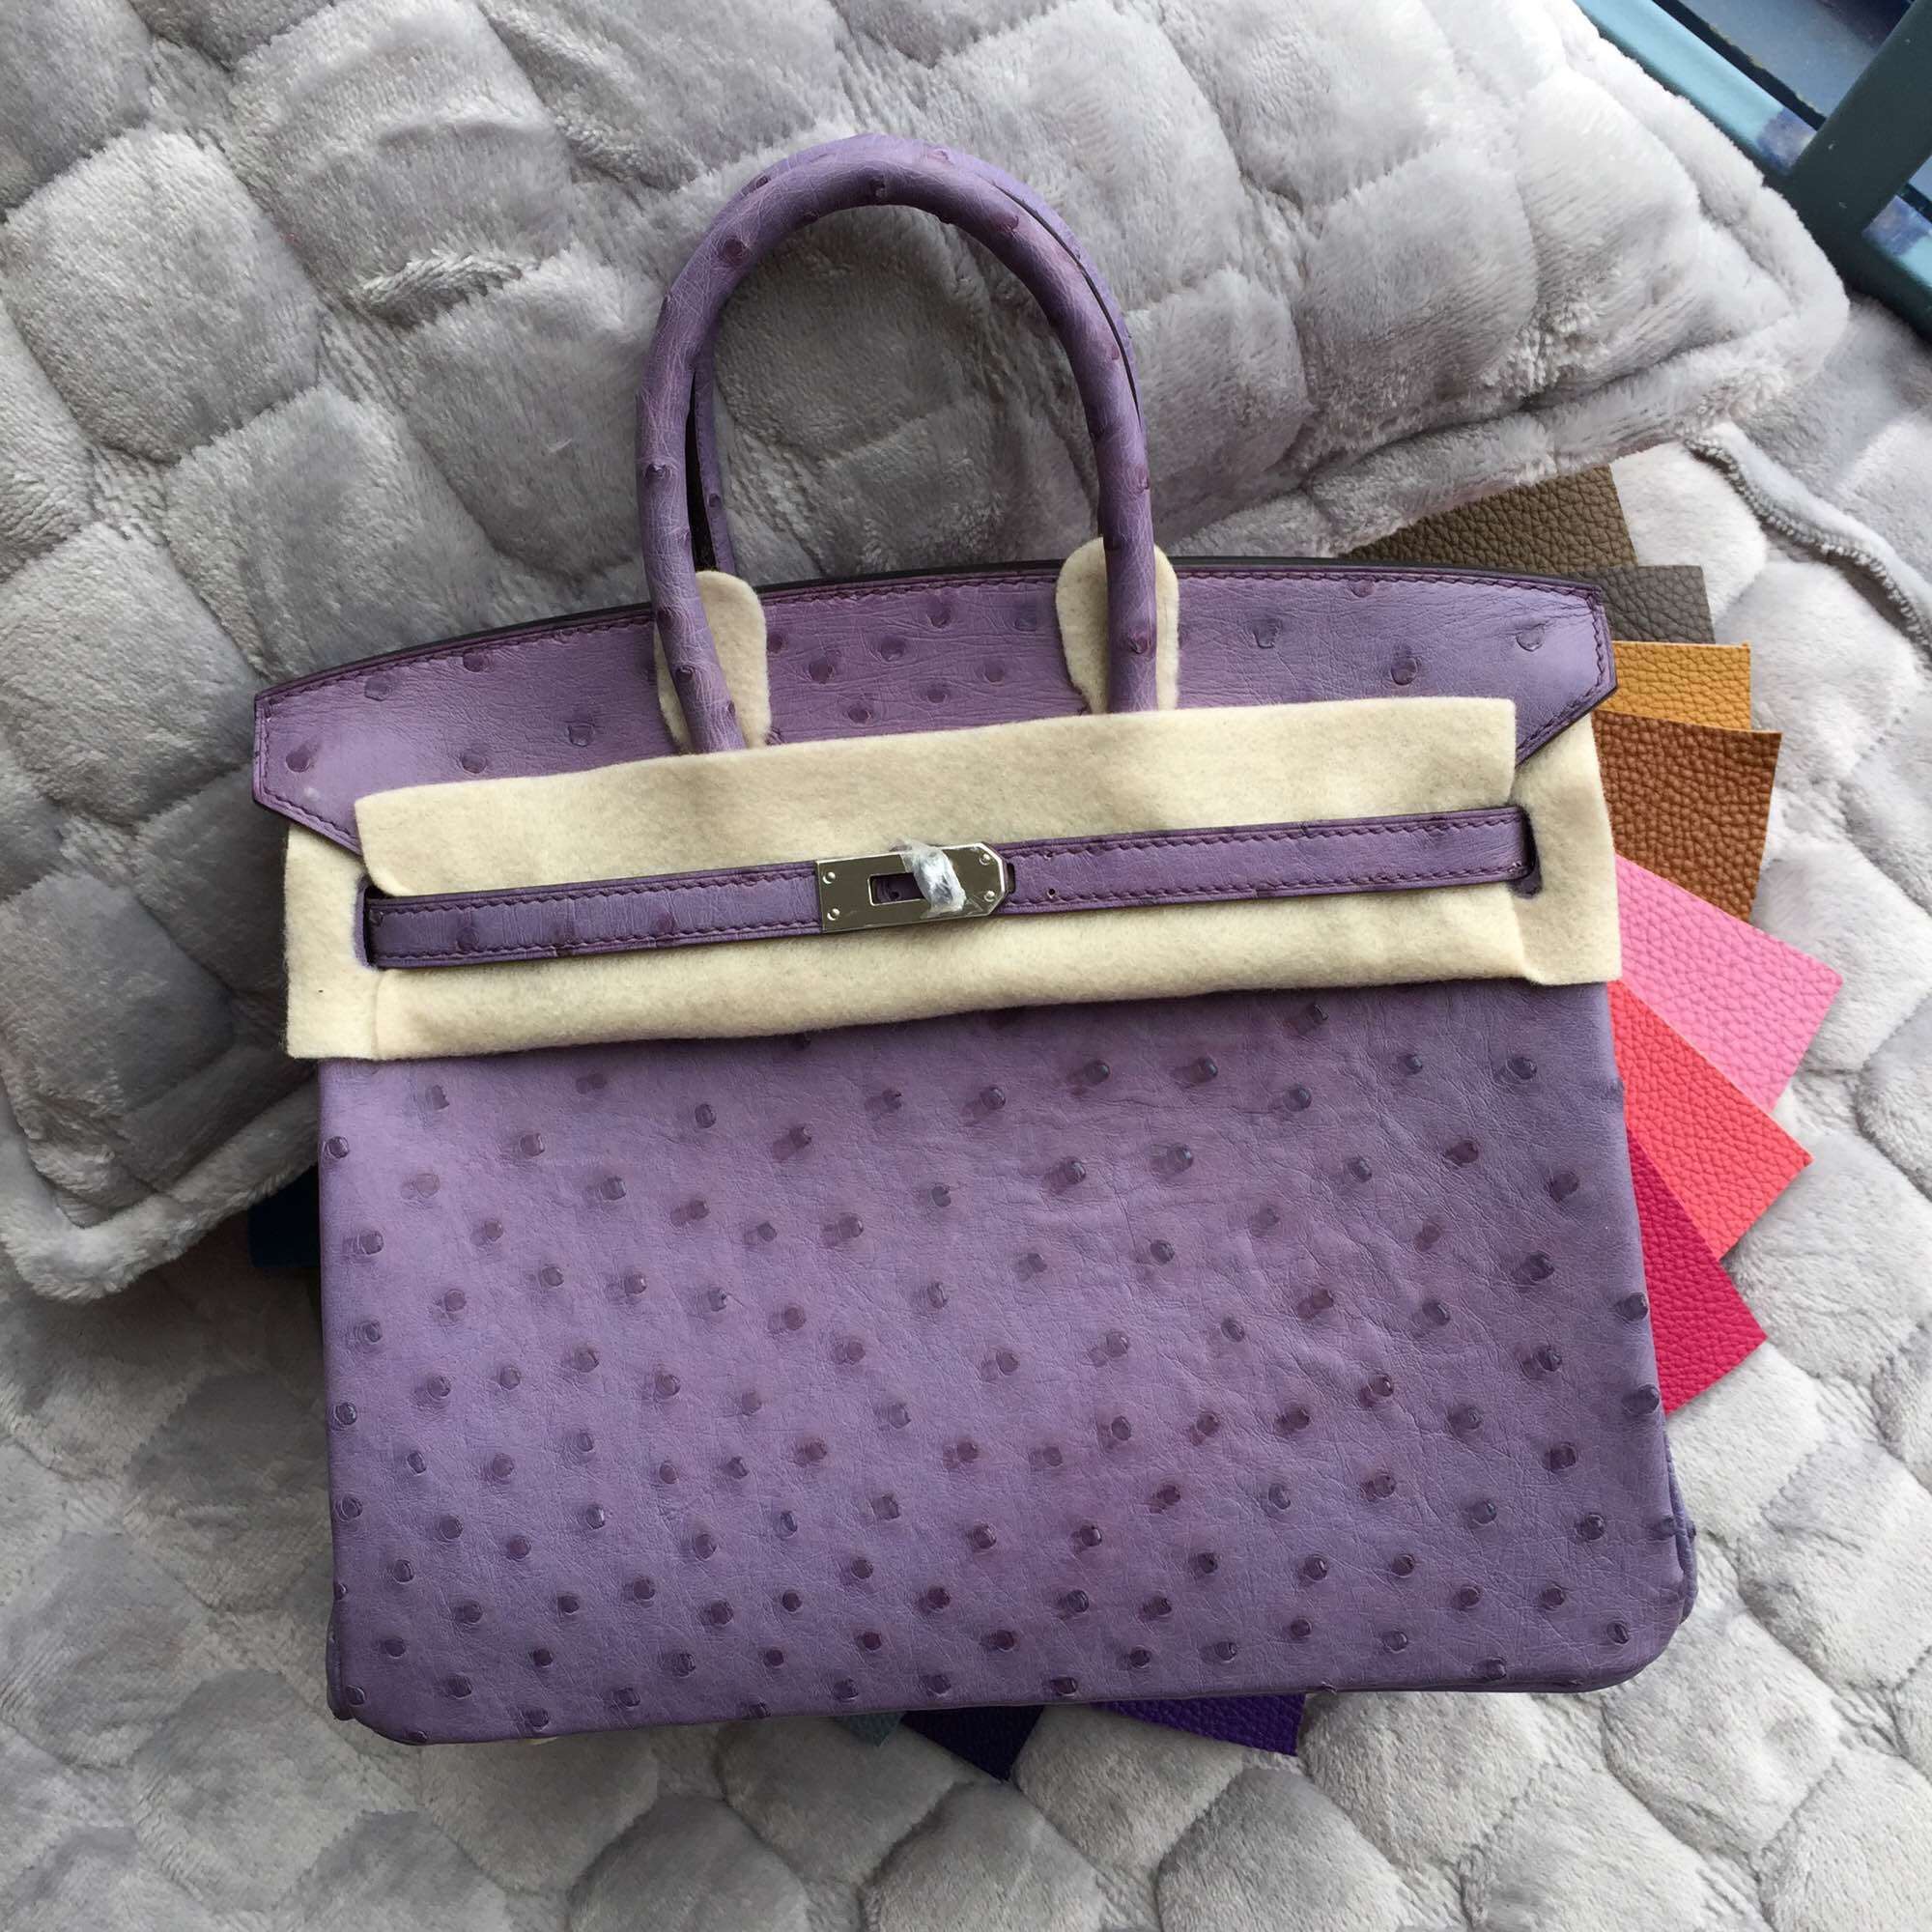 Discount 25CM Hermes Birkin Bag in Light Purple Ostrich Leather